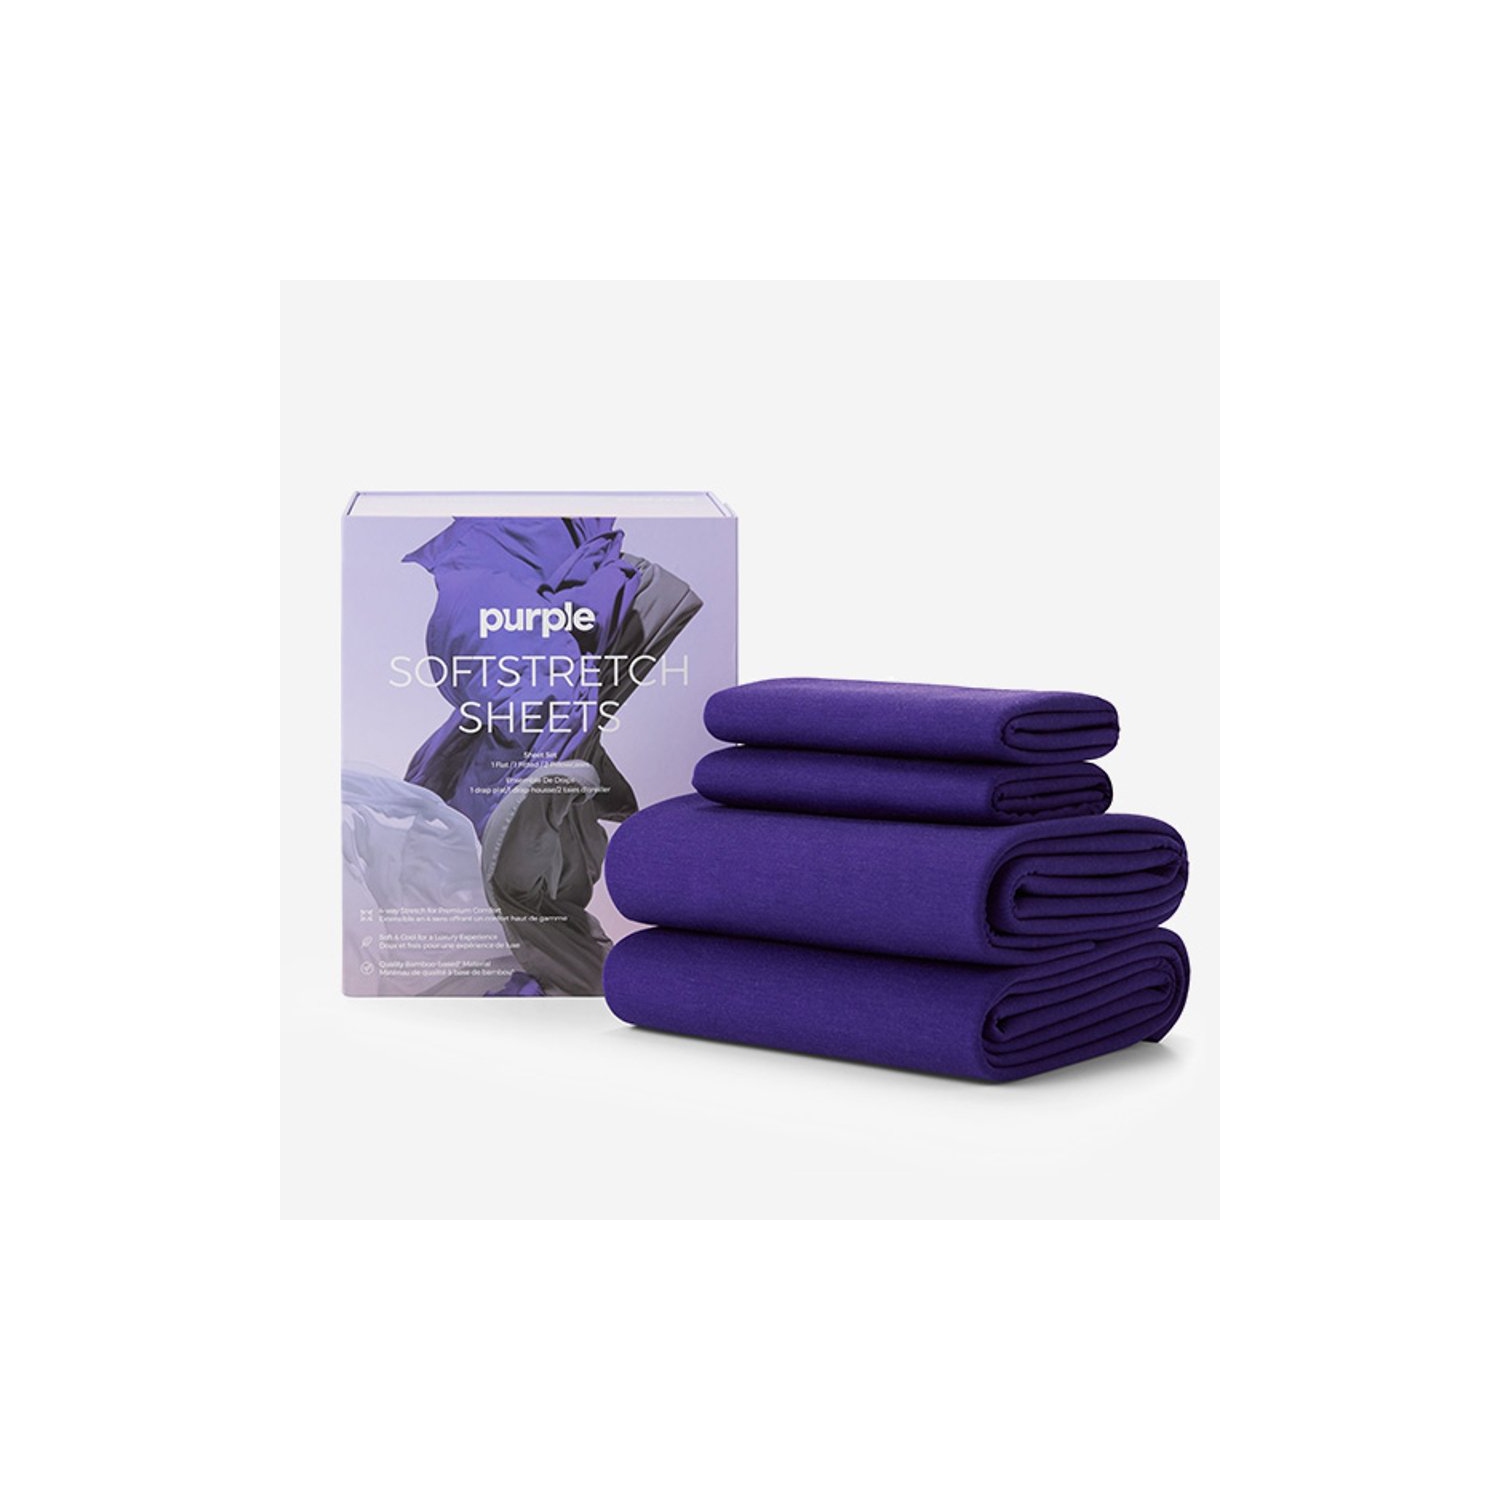  Purple SoftStretch Sheets, Full, Bamboo Sheets,  Moisture-Wicking, Deep Purple : Home & Kitchen